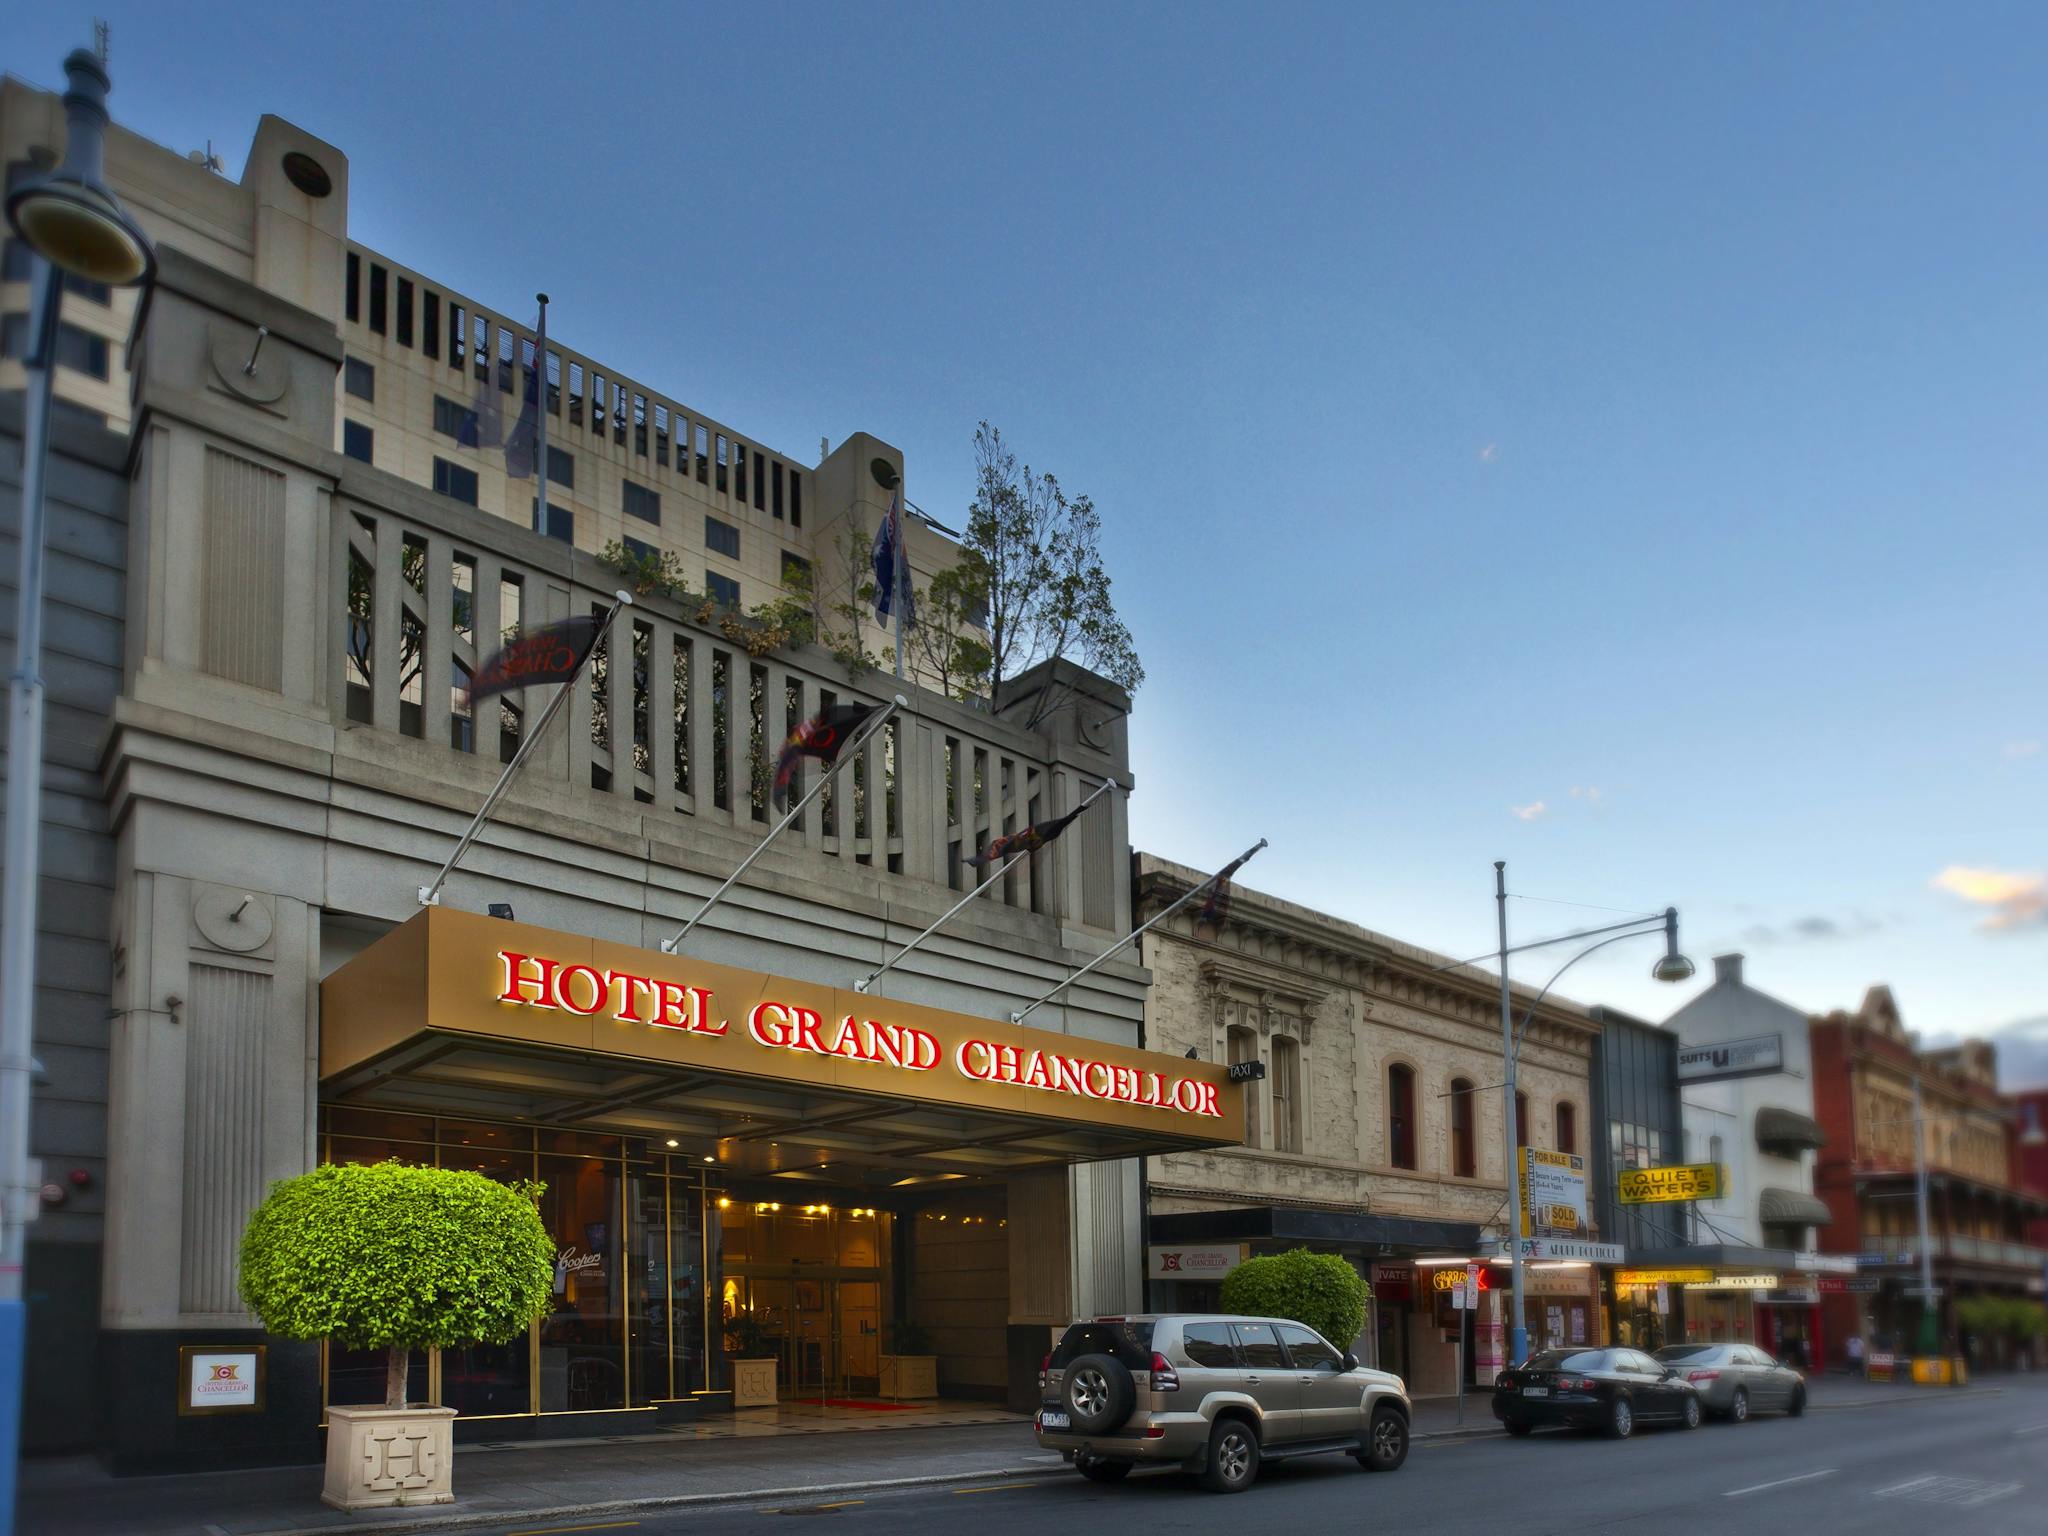 Hotel Grand Chancellor Adelaide Slider Image 3